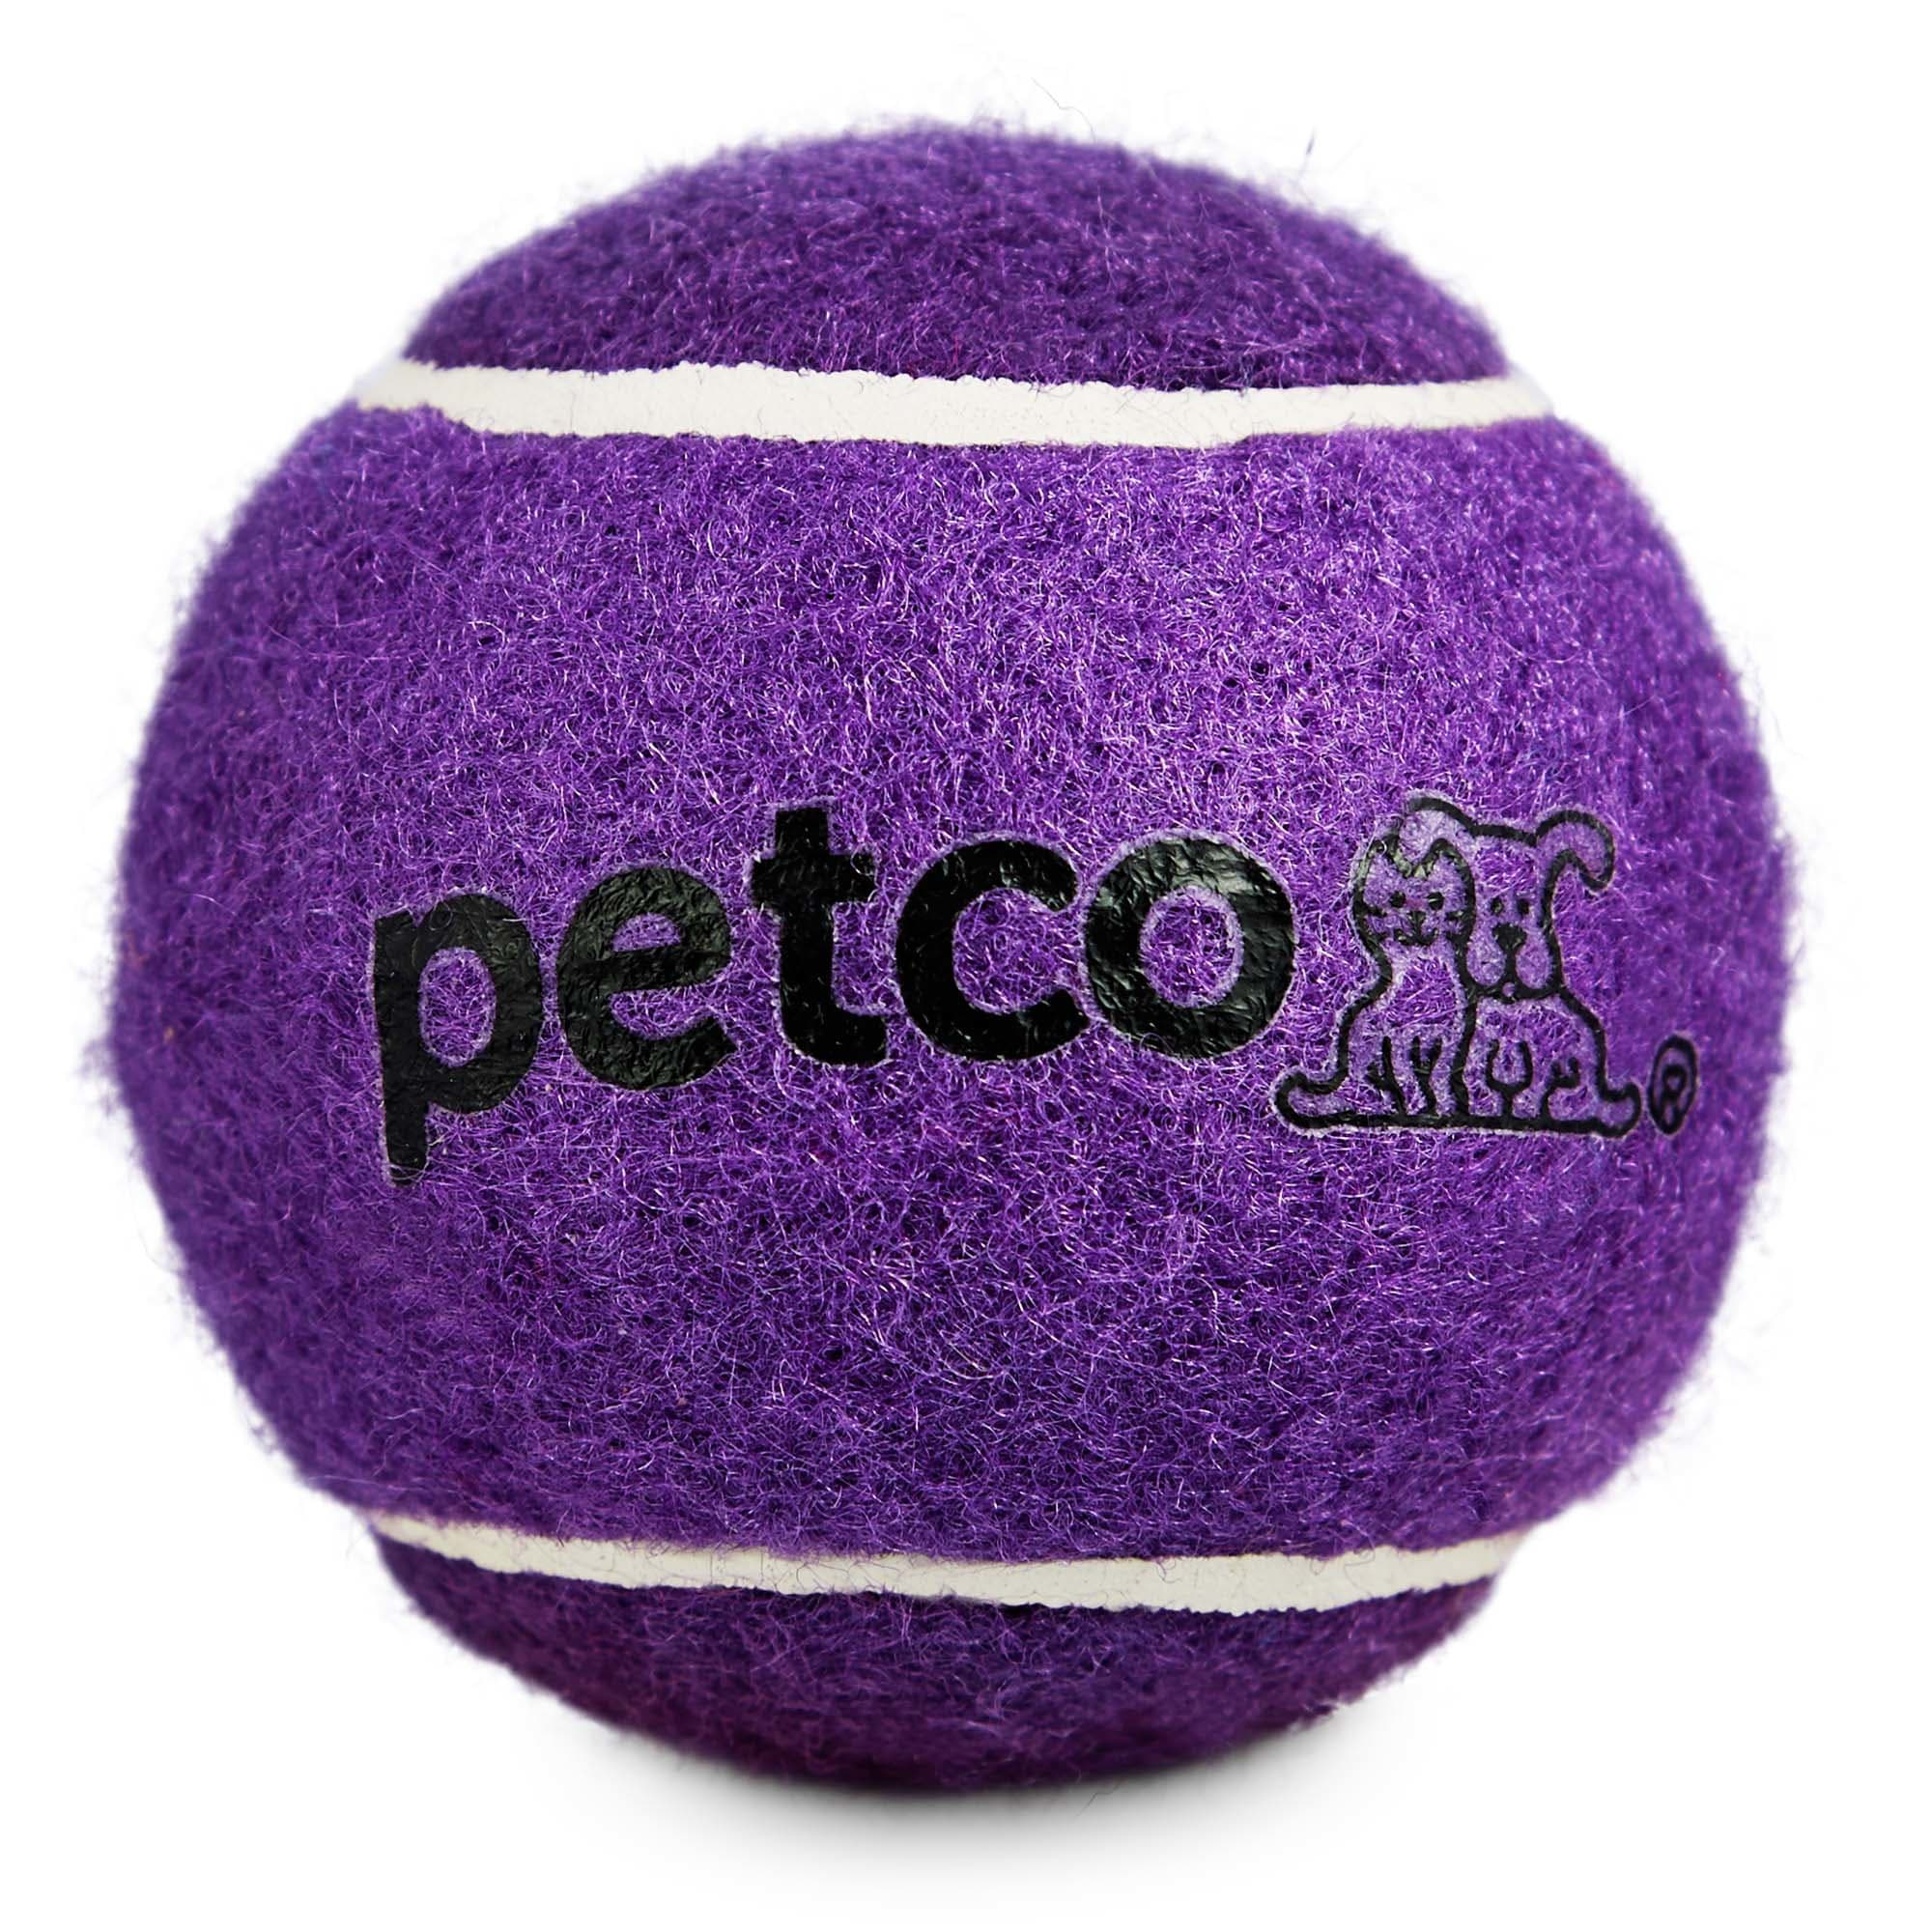 Petco Tennis Ball Dog Toy in Purple, 2.5" Petco